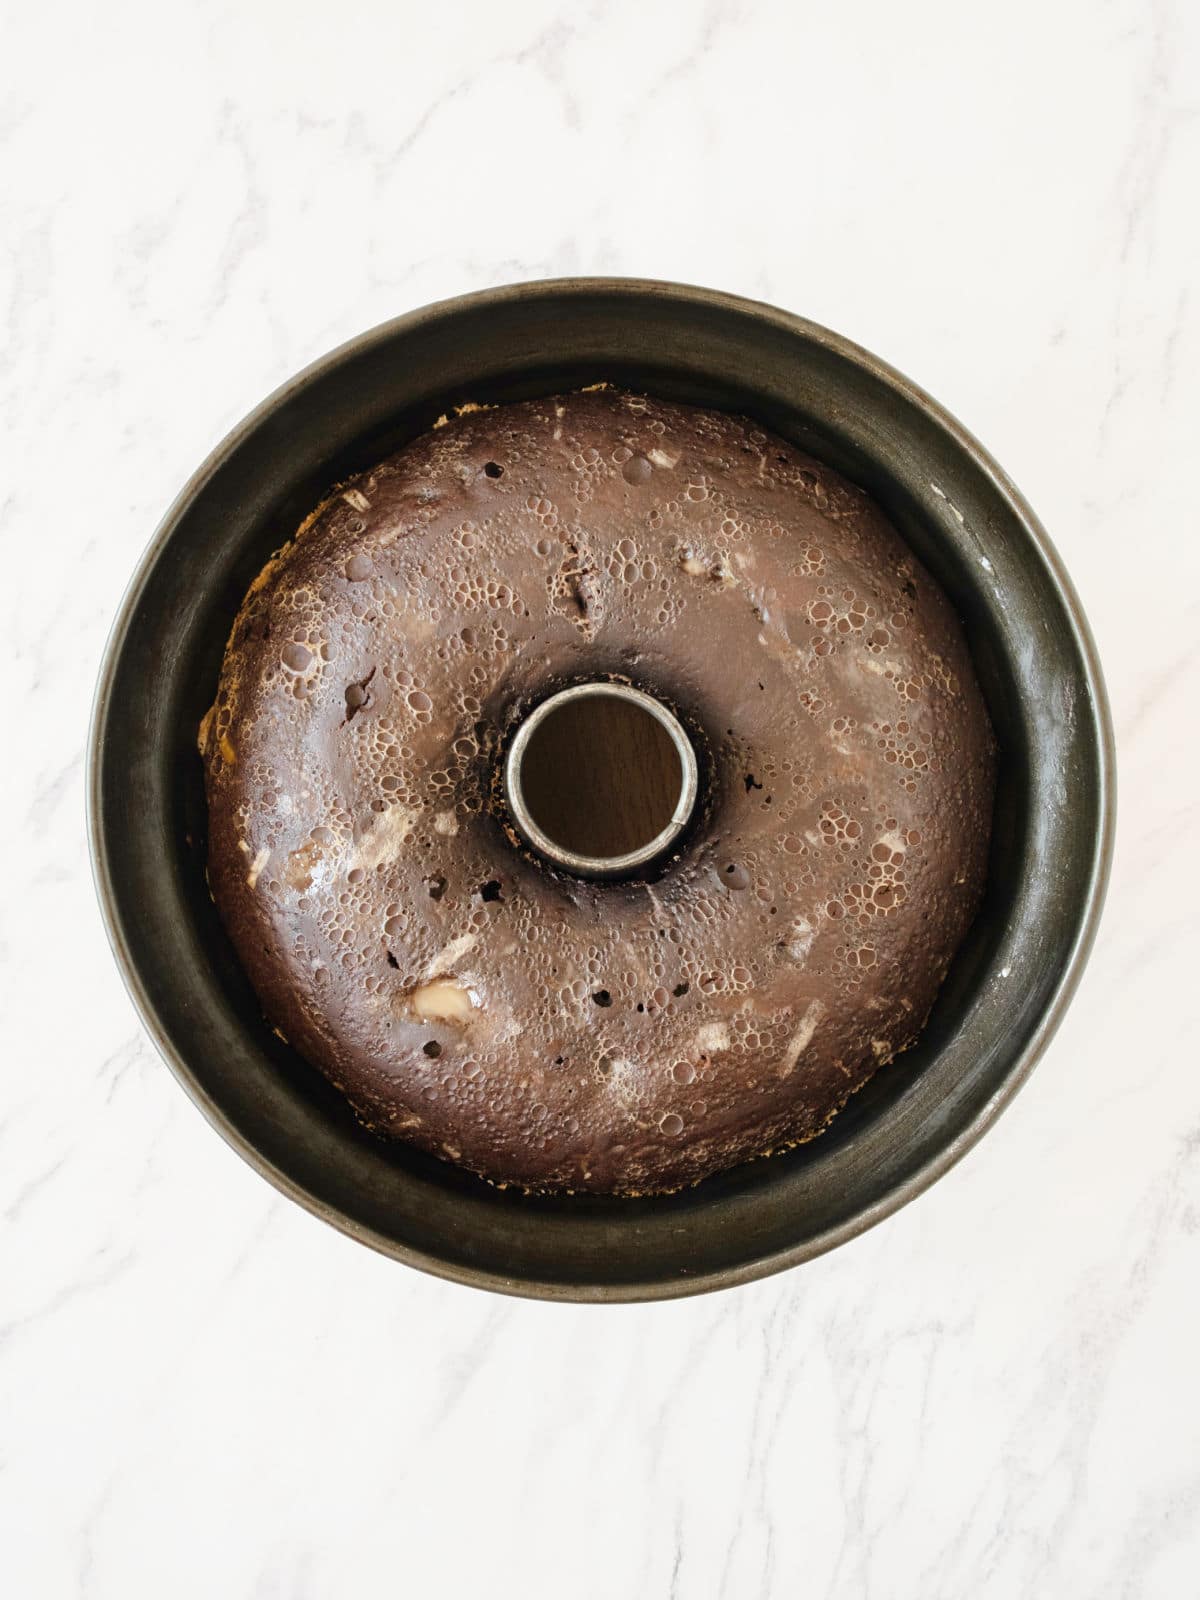 Baked chocolate flan cake in a dark bundt pan. White marbled surface.